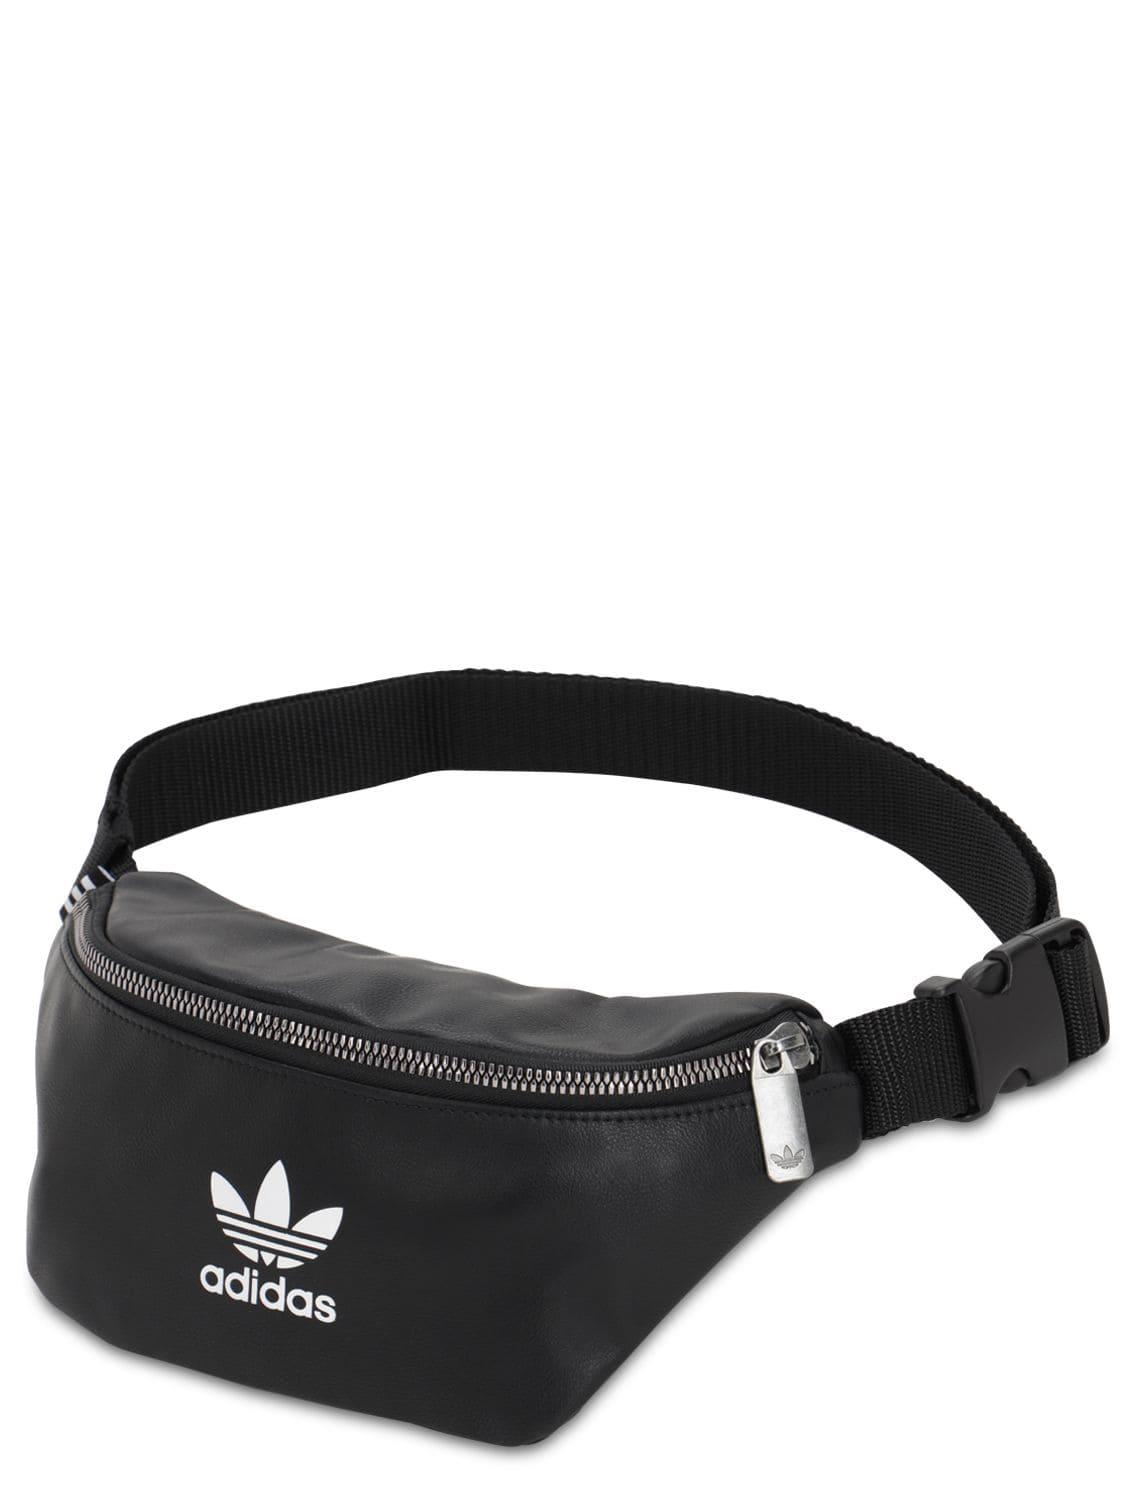 adidas Originals Faux Leather Belt Bag in Black - Lyst